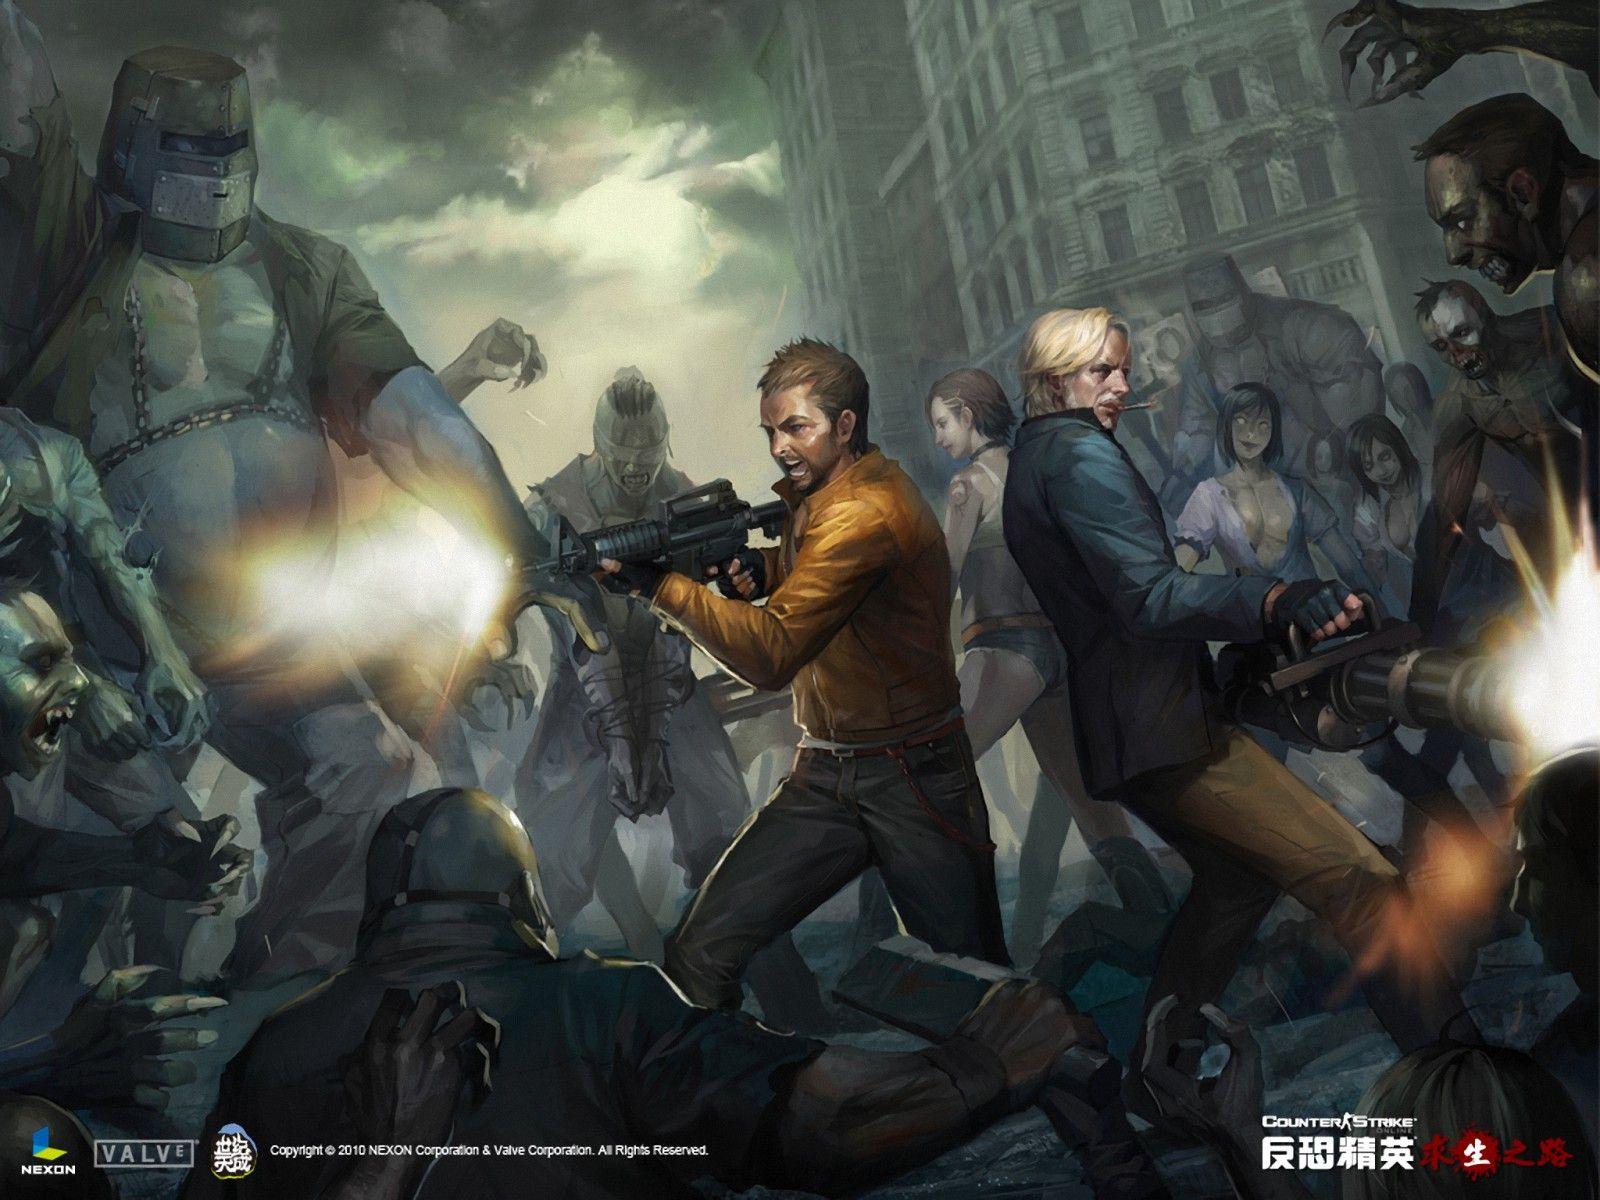 Counter Strike Online 08 1600x1200 Wallpaper, 1600x1200 Wallpaper